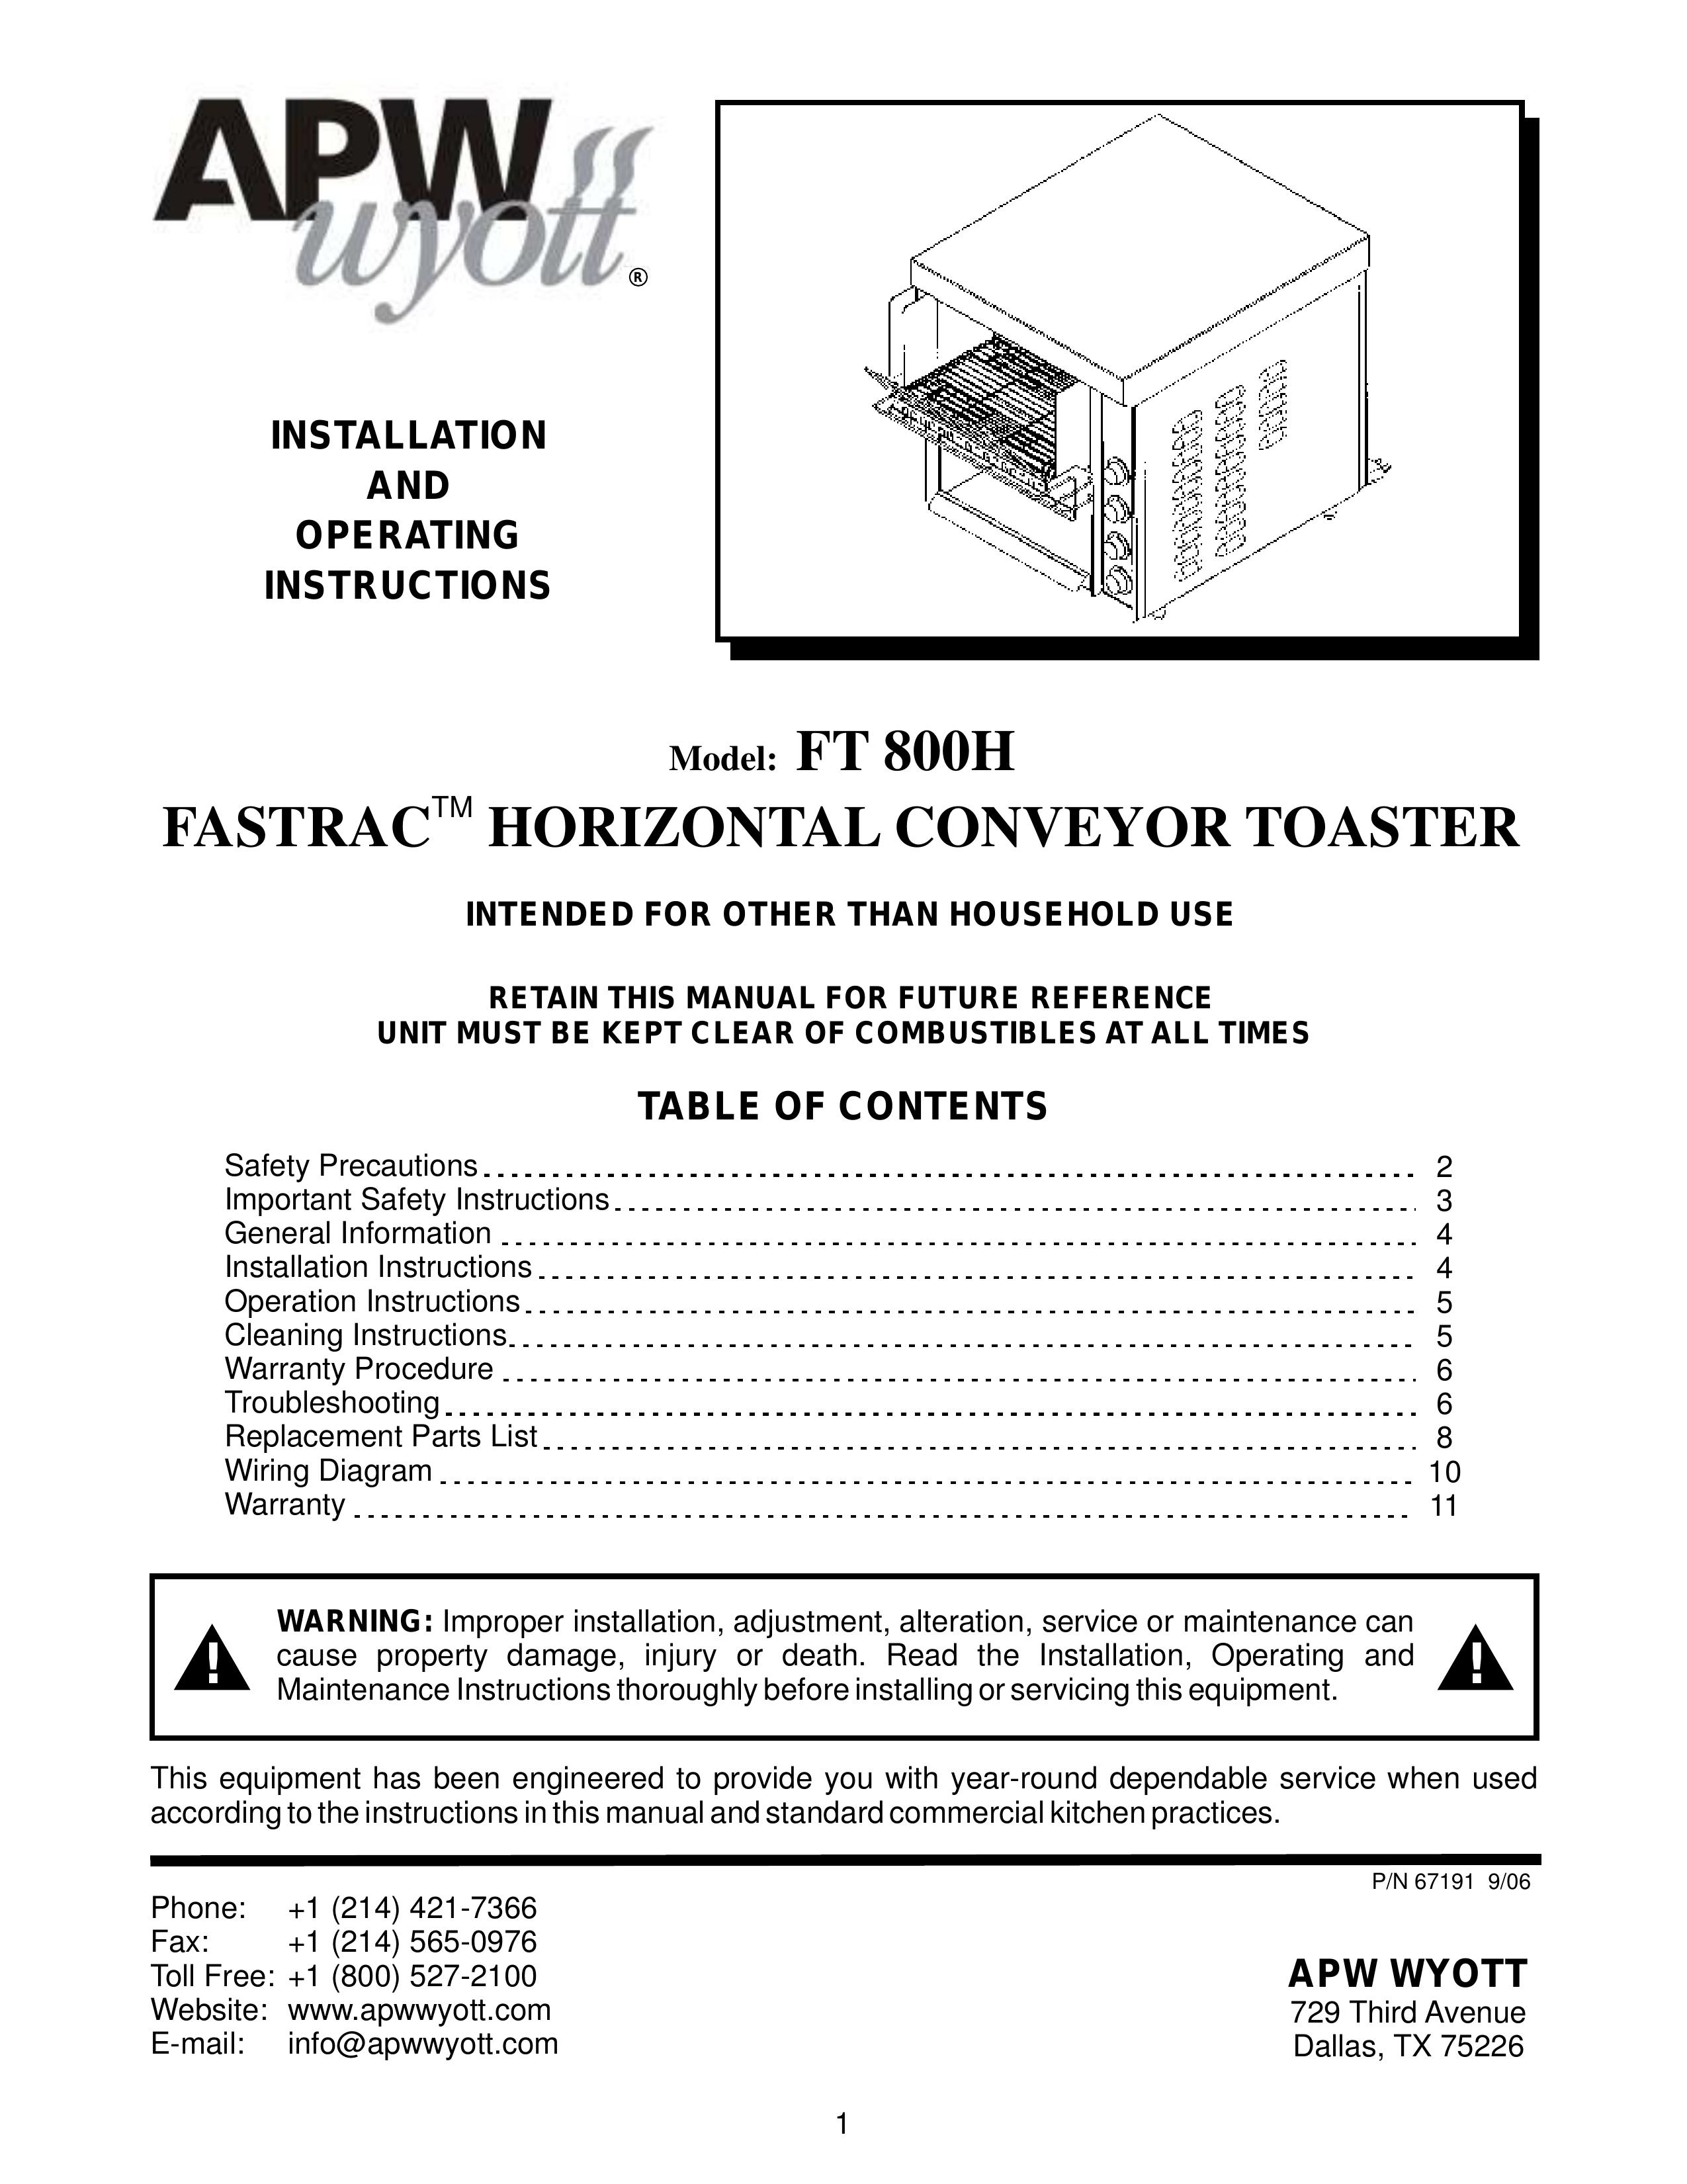 APW Wyott FT 800H Toaster User Manual